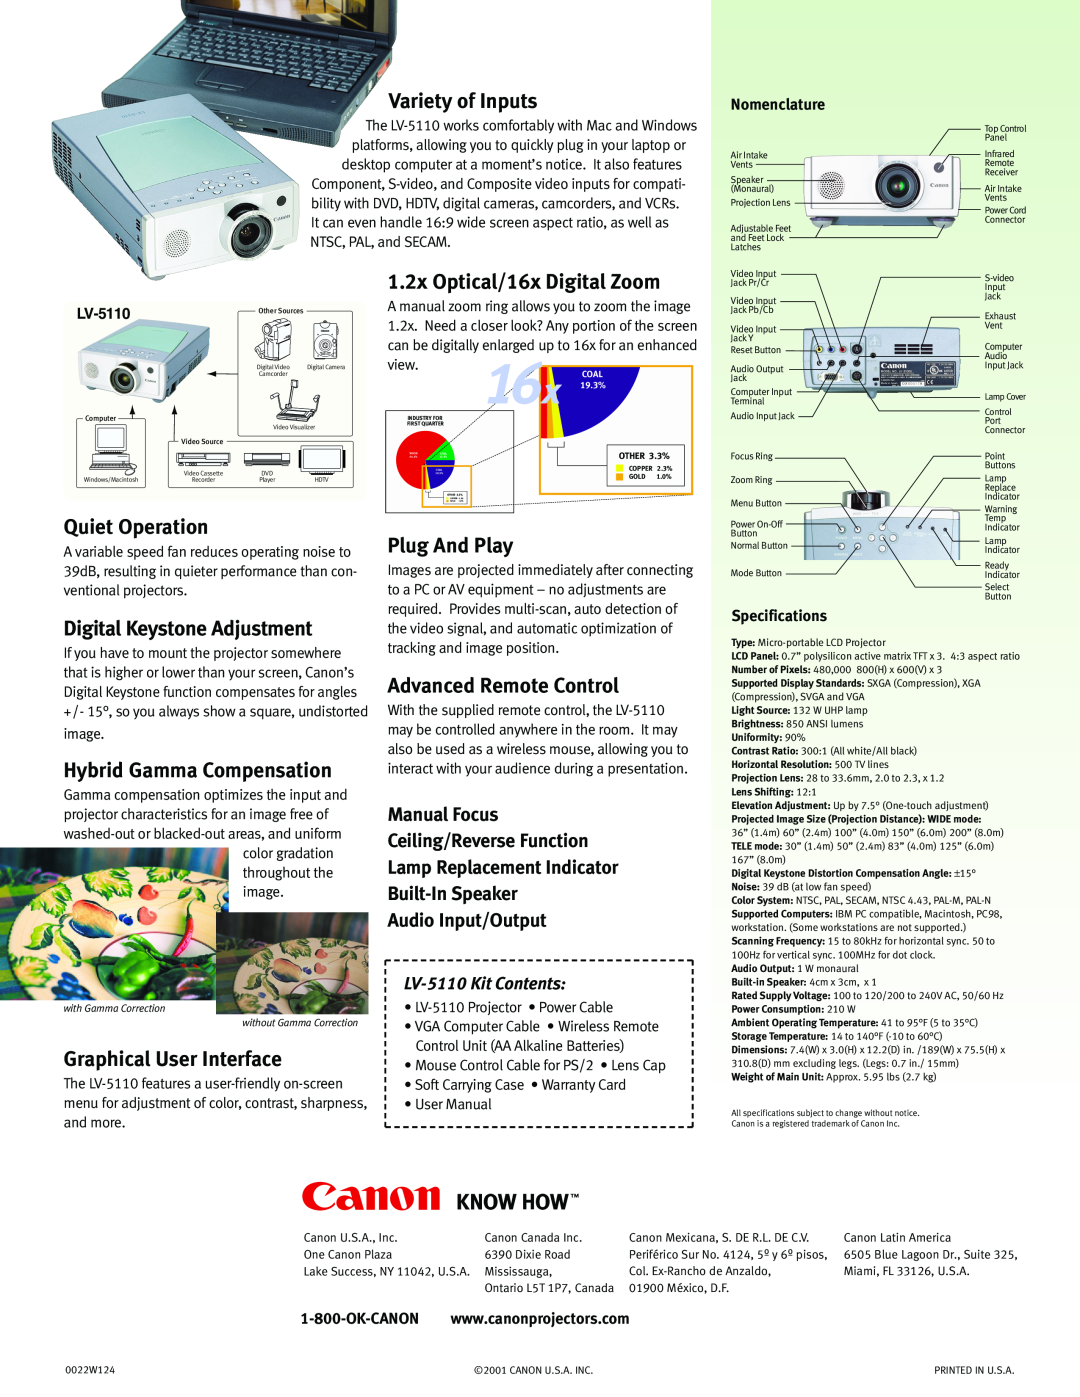 Cannon LV-5110 manual Variety of Inputs, 1.2x Optical/16x Digital Zoom, Quiet Operation, Digital Keystone Adjustment 